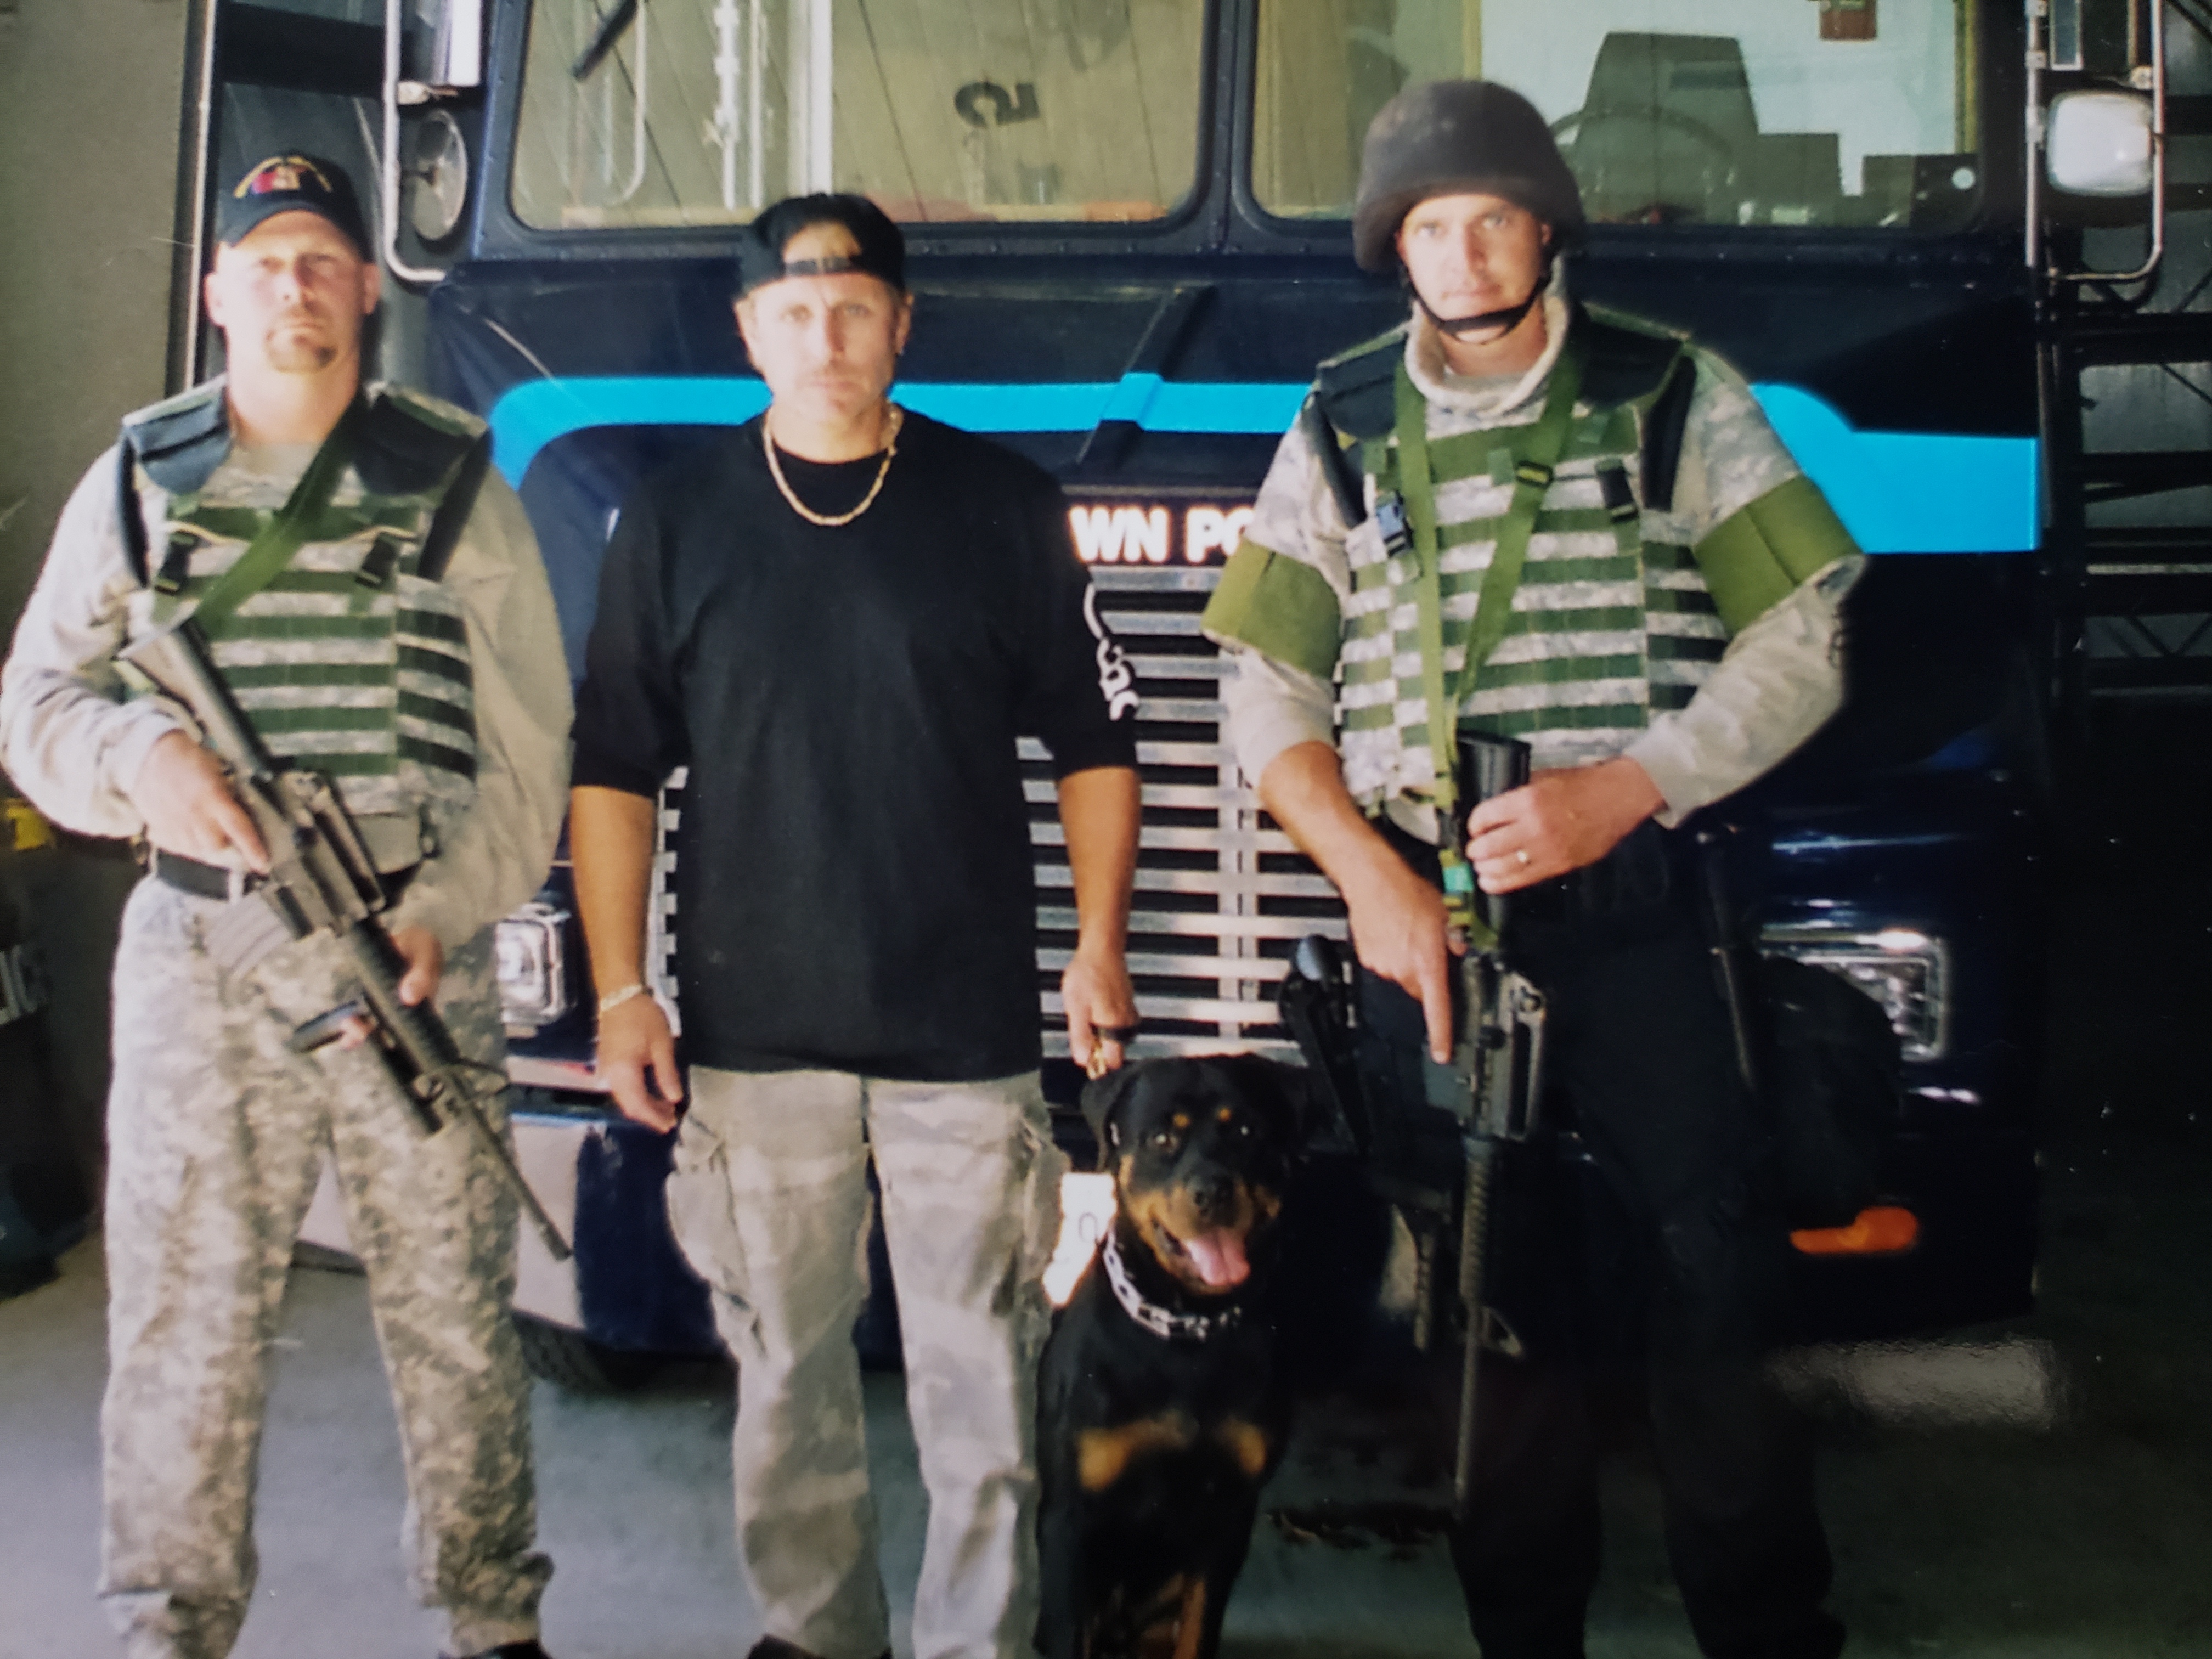 Police Protection Dog and SWAT Training Program